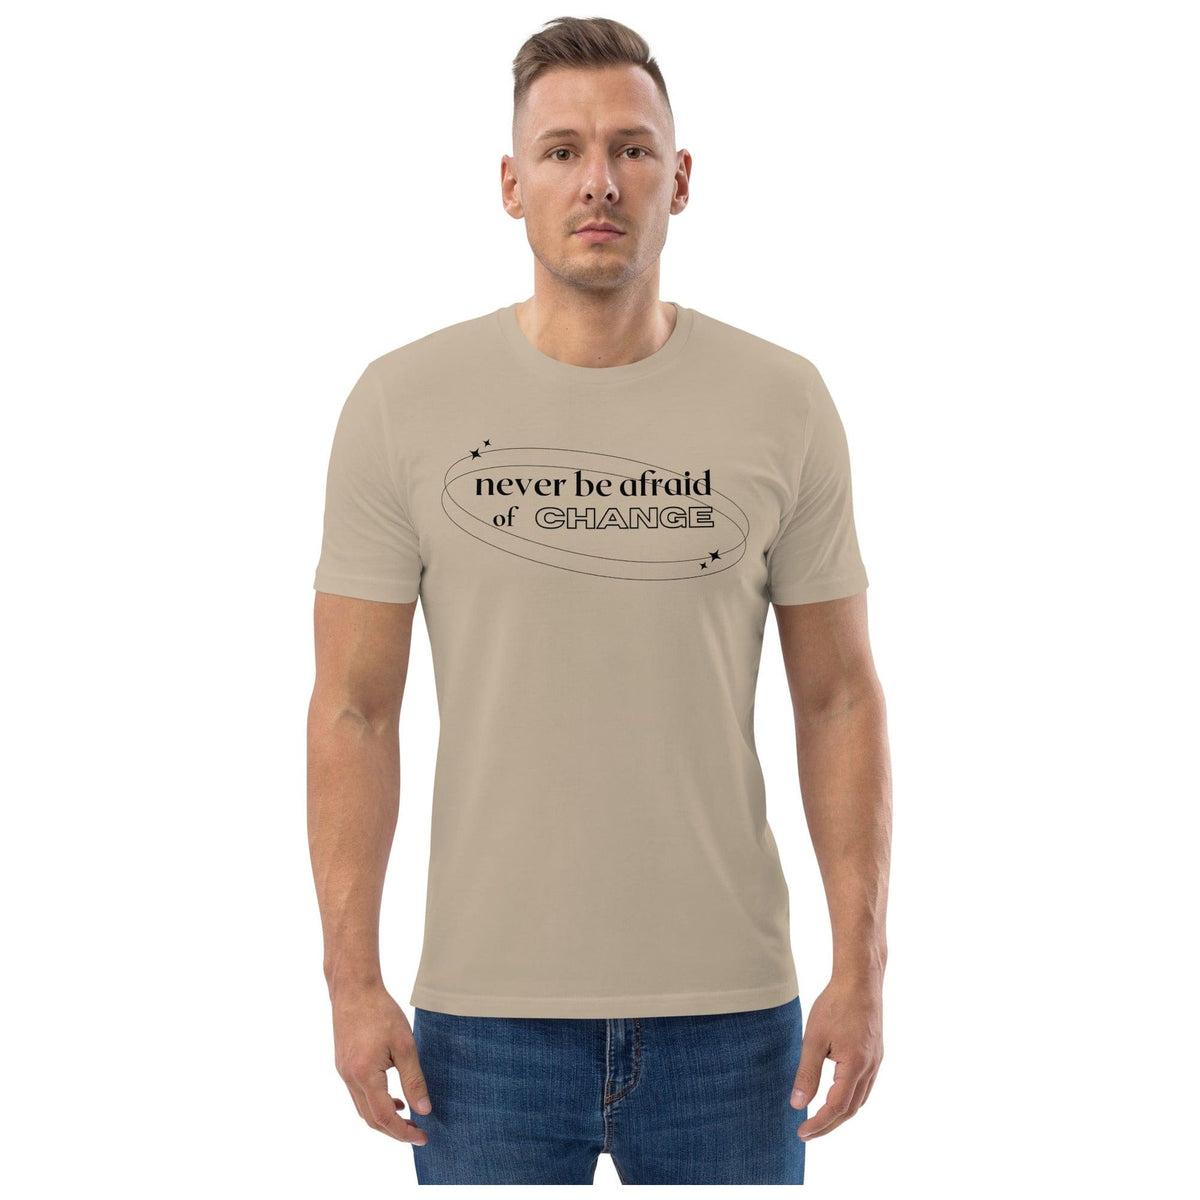 Karma Kiss T Shirt Desert Dust / S Never Be Afraid of Change - Unisex Organic Cotton T-Shirt